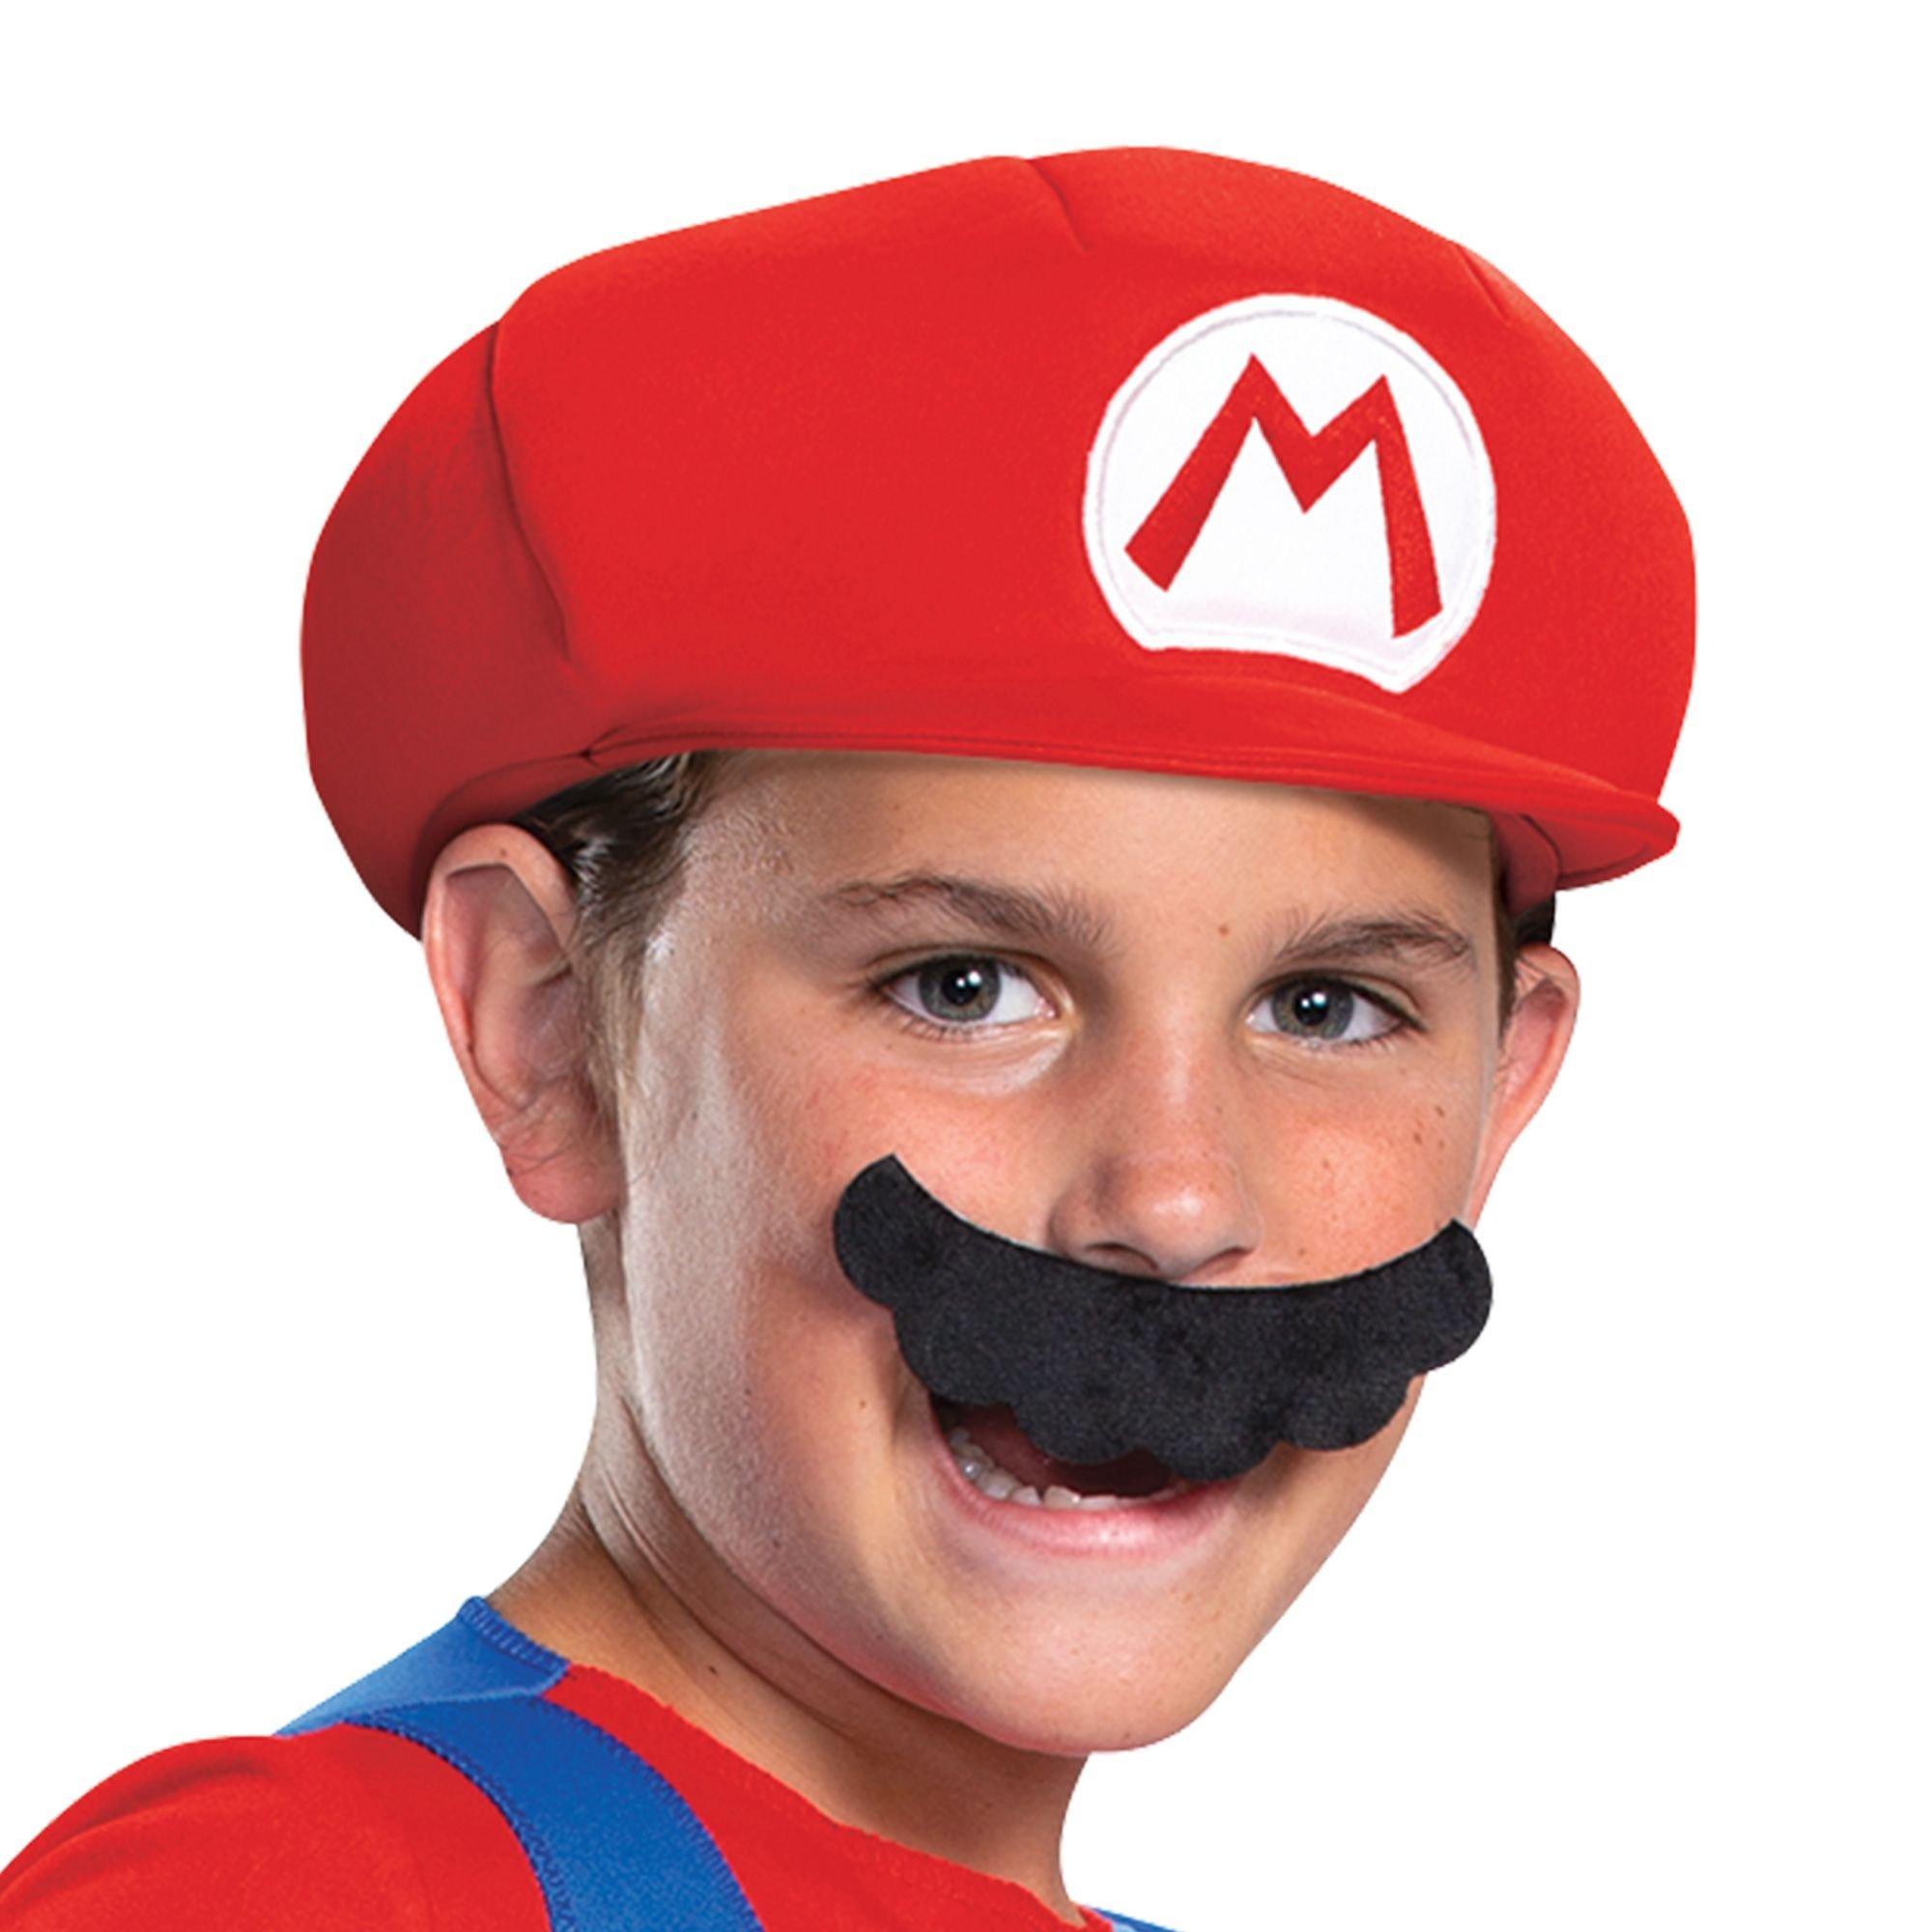 Deluxe Super Mario Bros Mario Costume for Boys